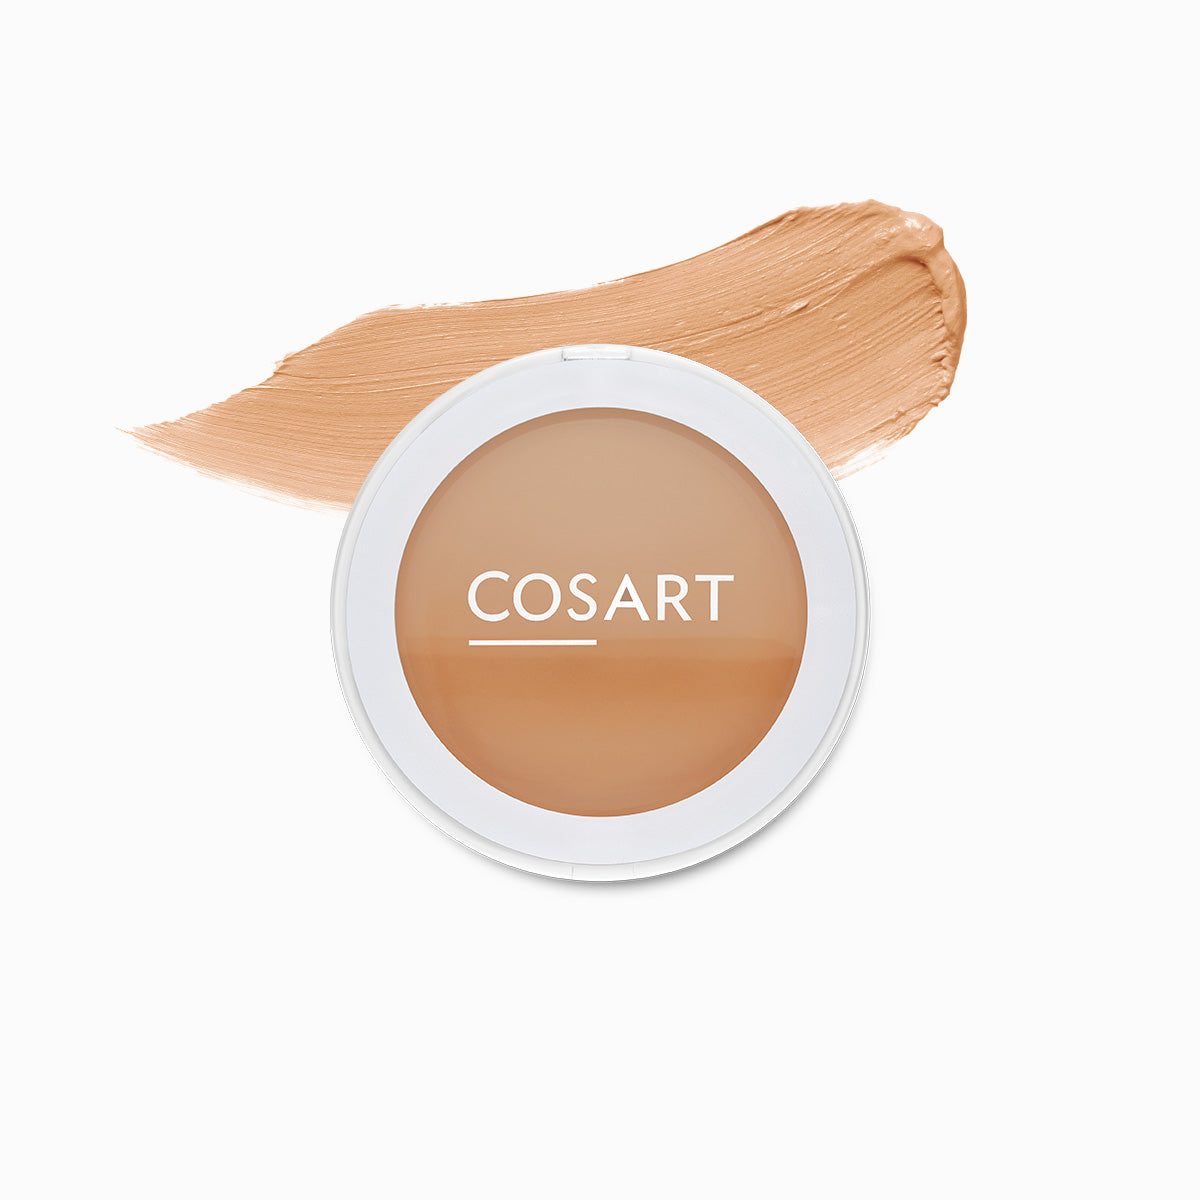 COSART | Make up Powder dry & wet